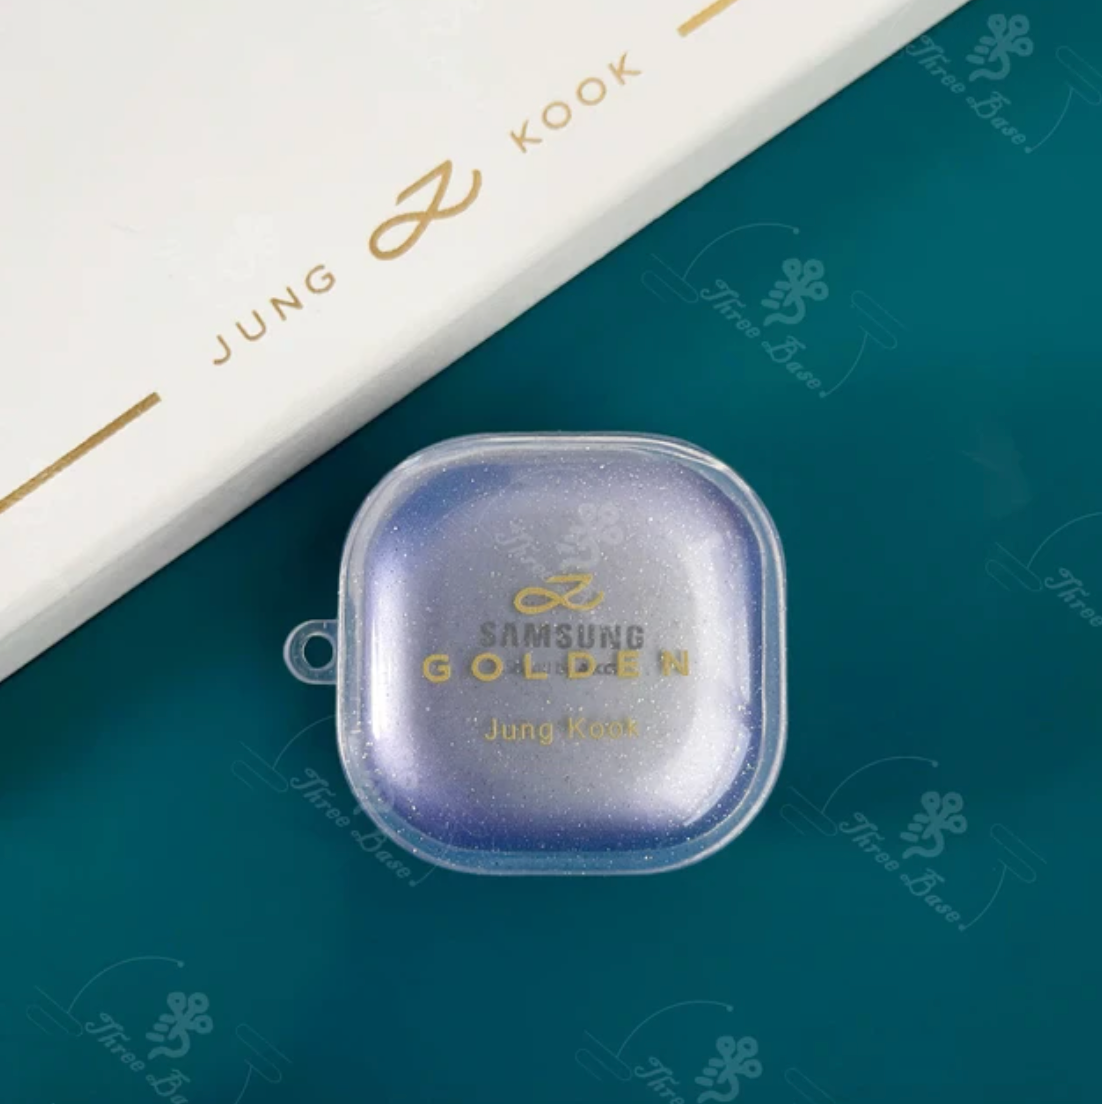 Tsuvishop BTS Jungkook golden samsung buds case bts fan gift kpop earphone Case bts jungkook phone case for iphone airpods samsung keychain